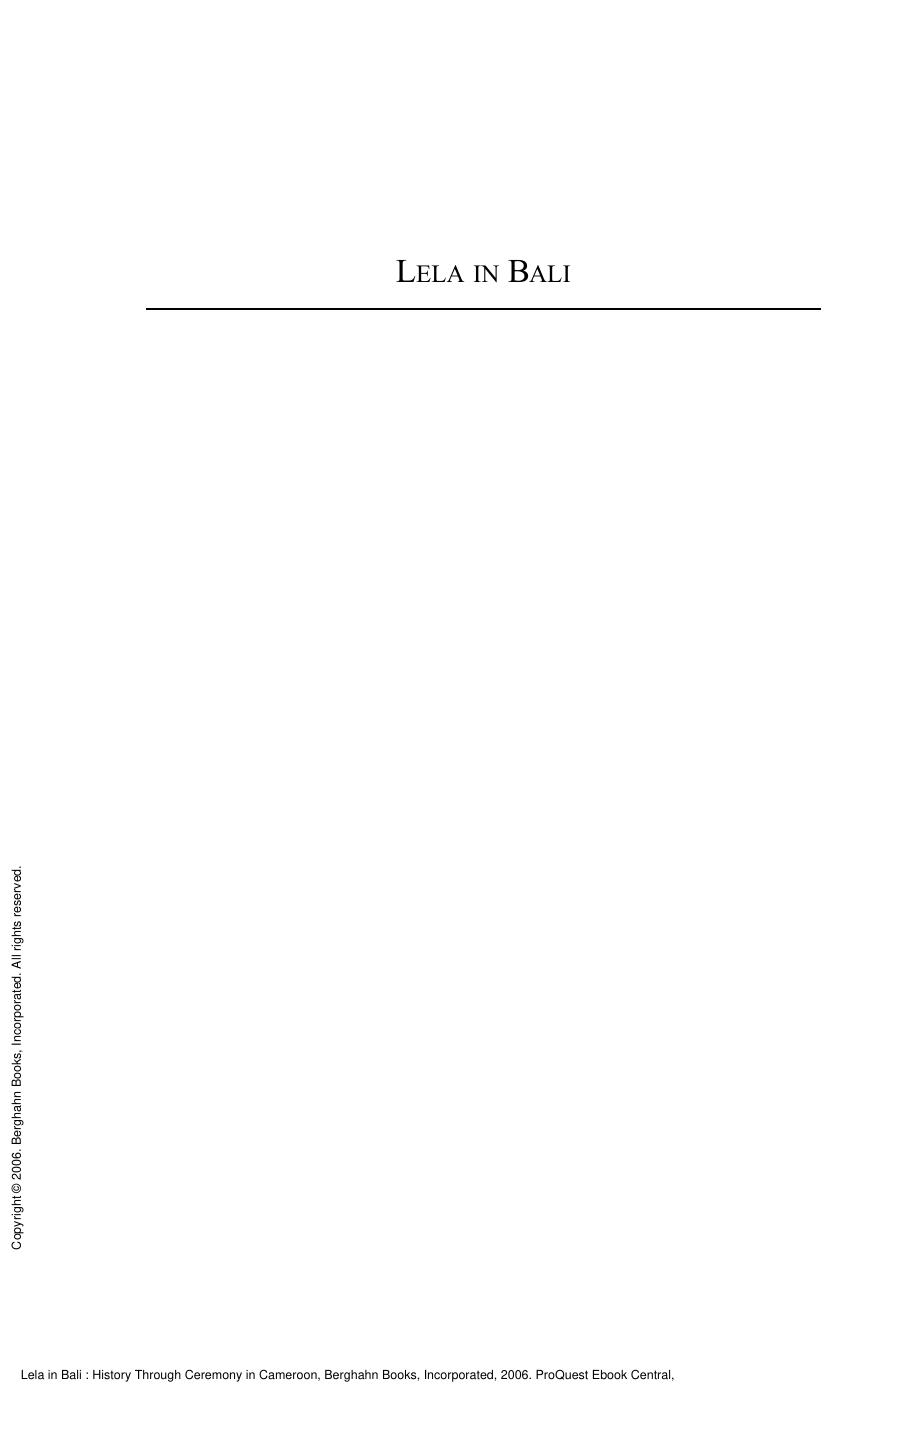 Lela in Bali : History Through Ceremony in Cameroon by Richard Fardon